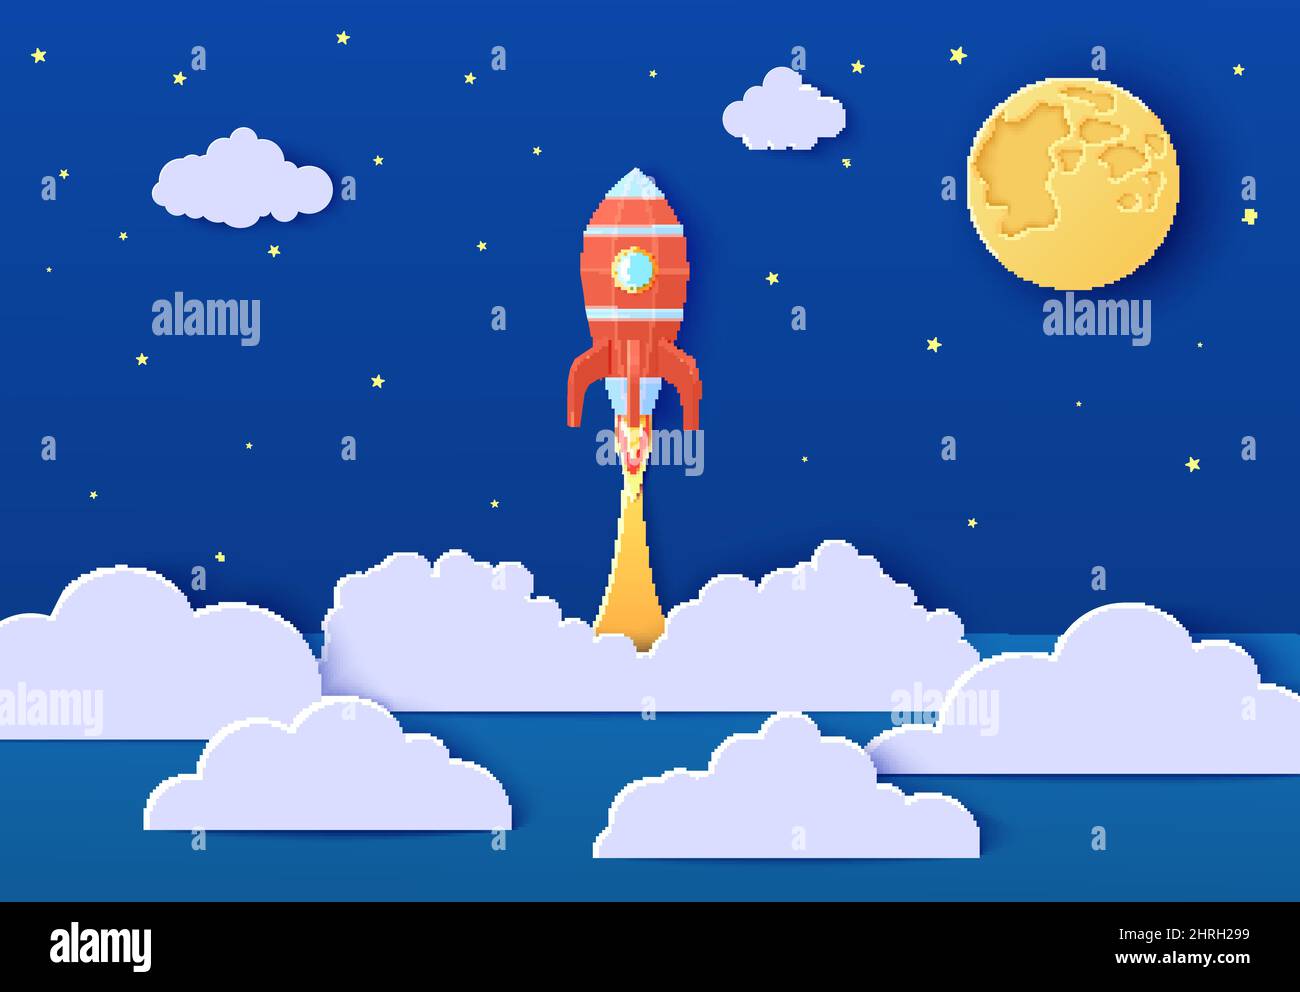 Roter Raketenstart im Weltraum in Papierschnitt-Stil. Galaxy Landschaft 3D Handwerk Hintergrund. Karton Ausschnitt Mondplanet wolkige Landschaft. Vector Kinderkarte Stock Vektor